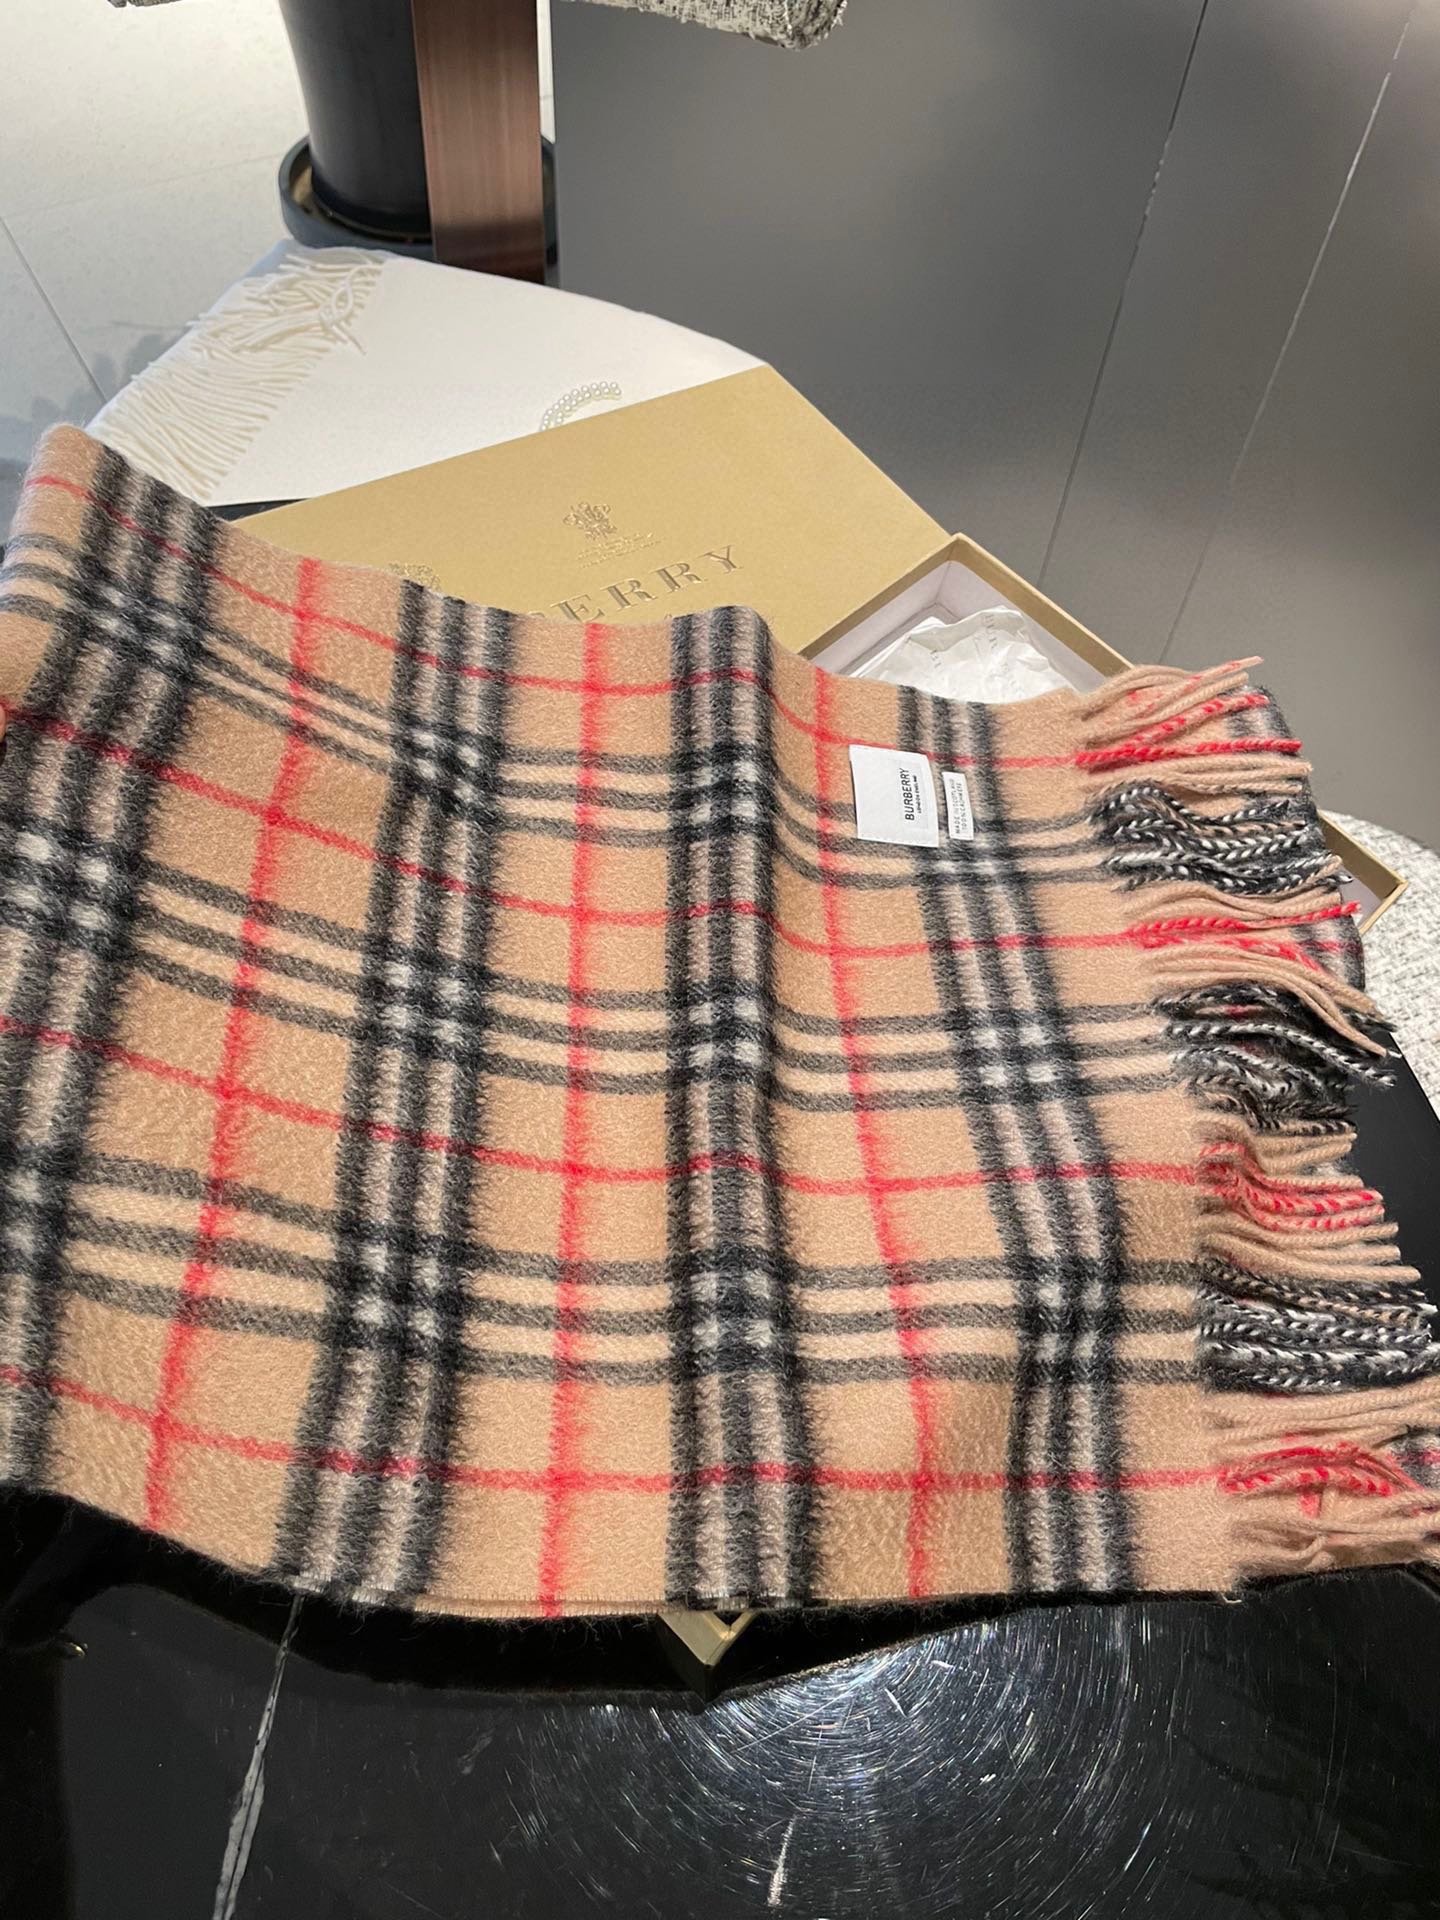 P王牌口碑burberry深度水波纹经典羊绒格子围巾️专柜最新品相目前专柜都换上了新标经典中的经典.全品